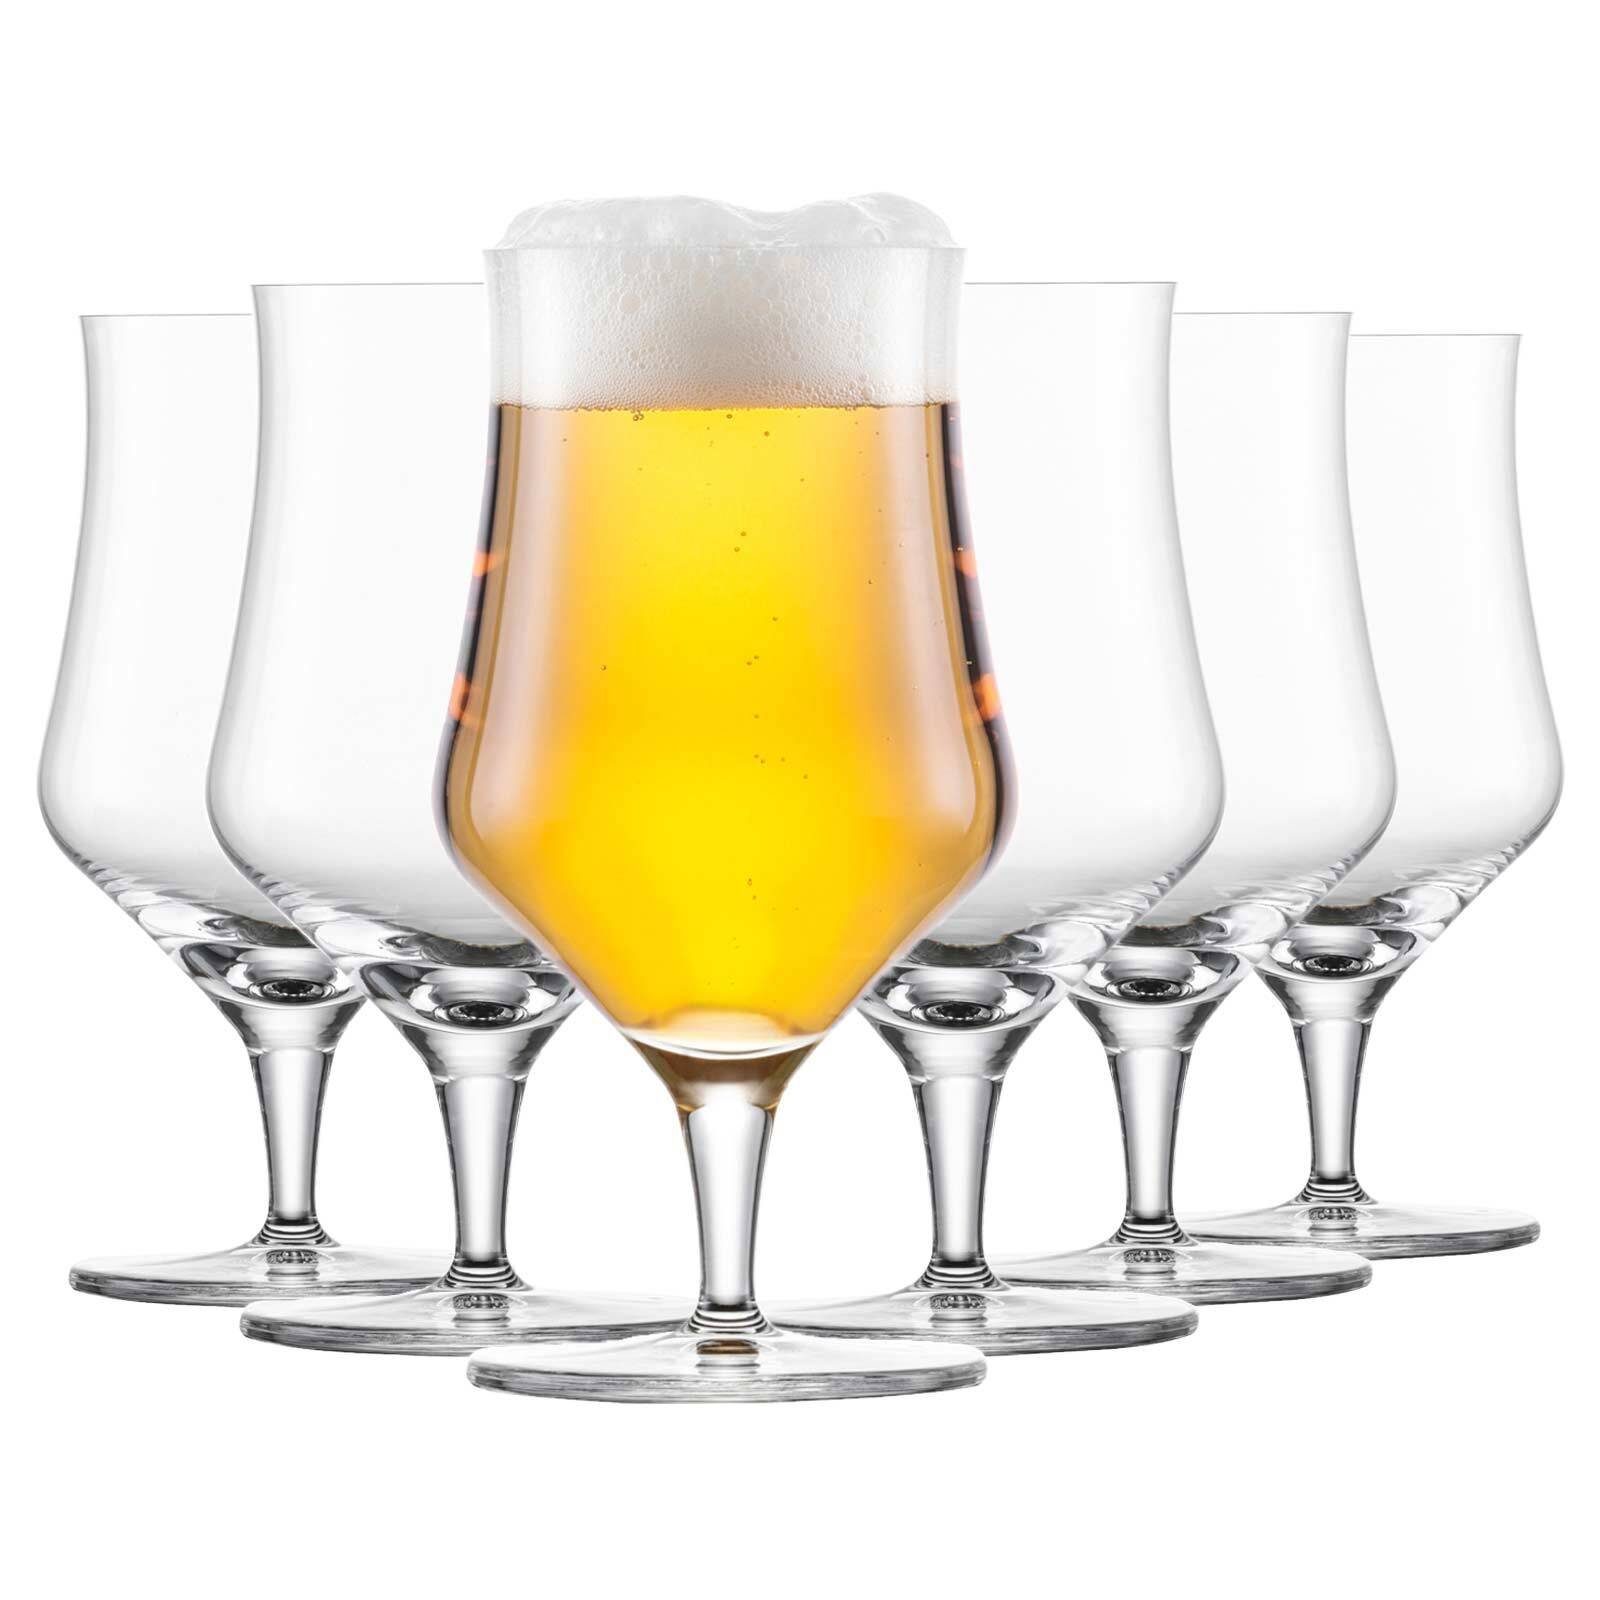 SCHOTT-ZWIESEL Bierglas Beer Basic Craft Beer Gläser 0,3 Liter 6er Set, Glas